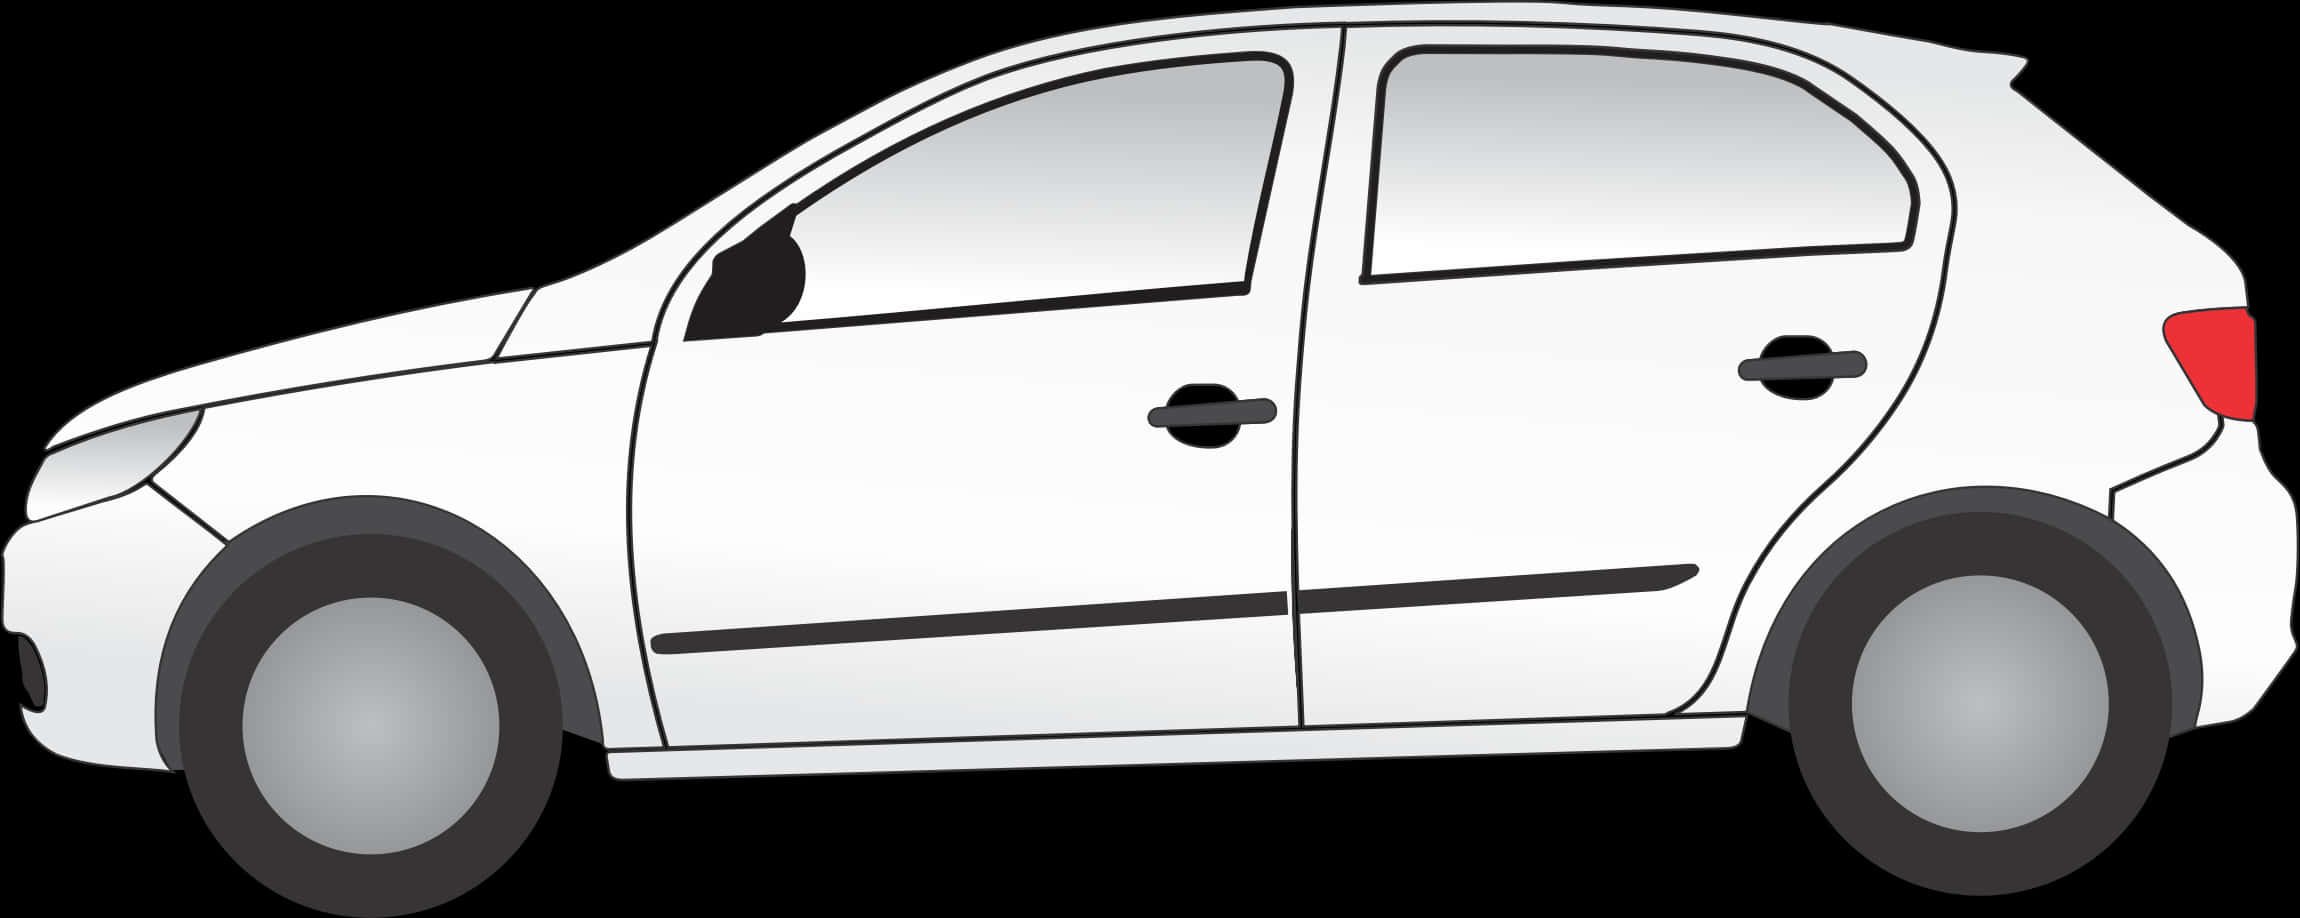 White Hatchback Car Side View Vector PNG image